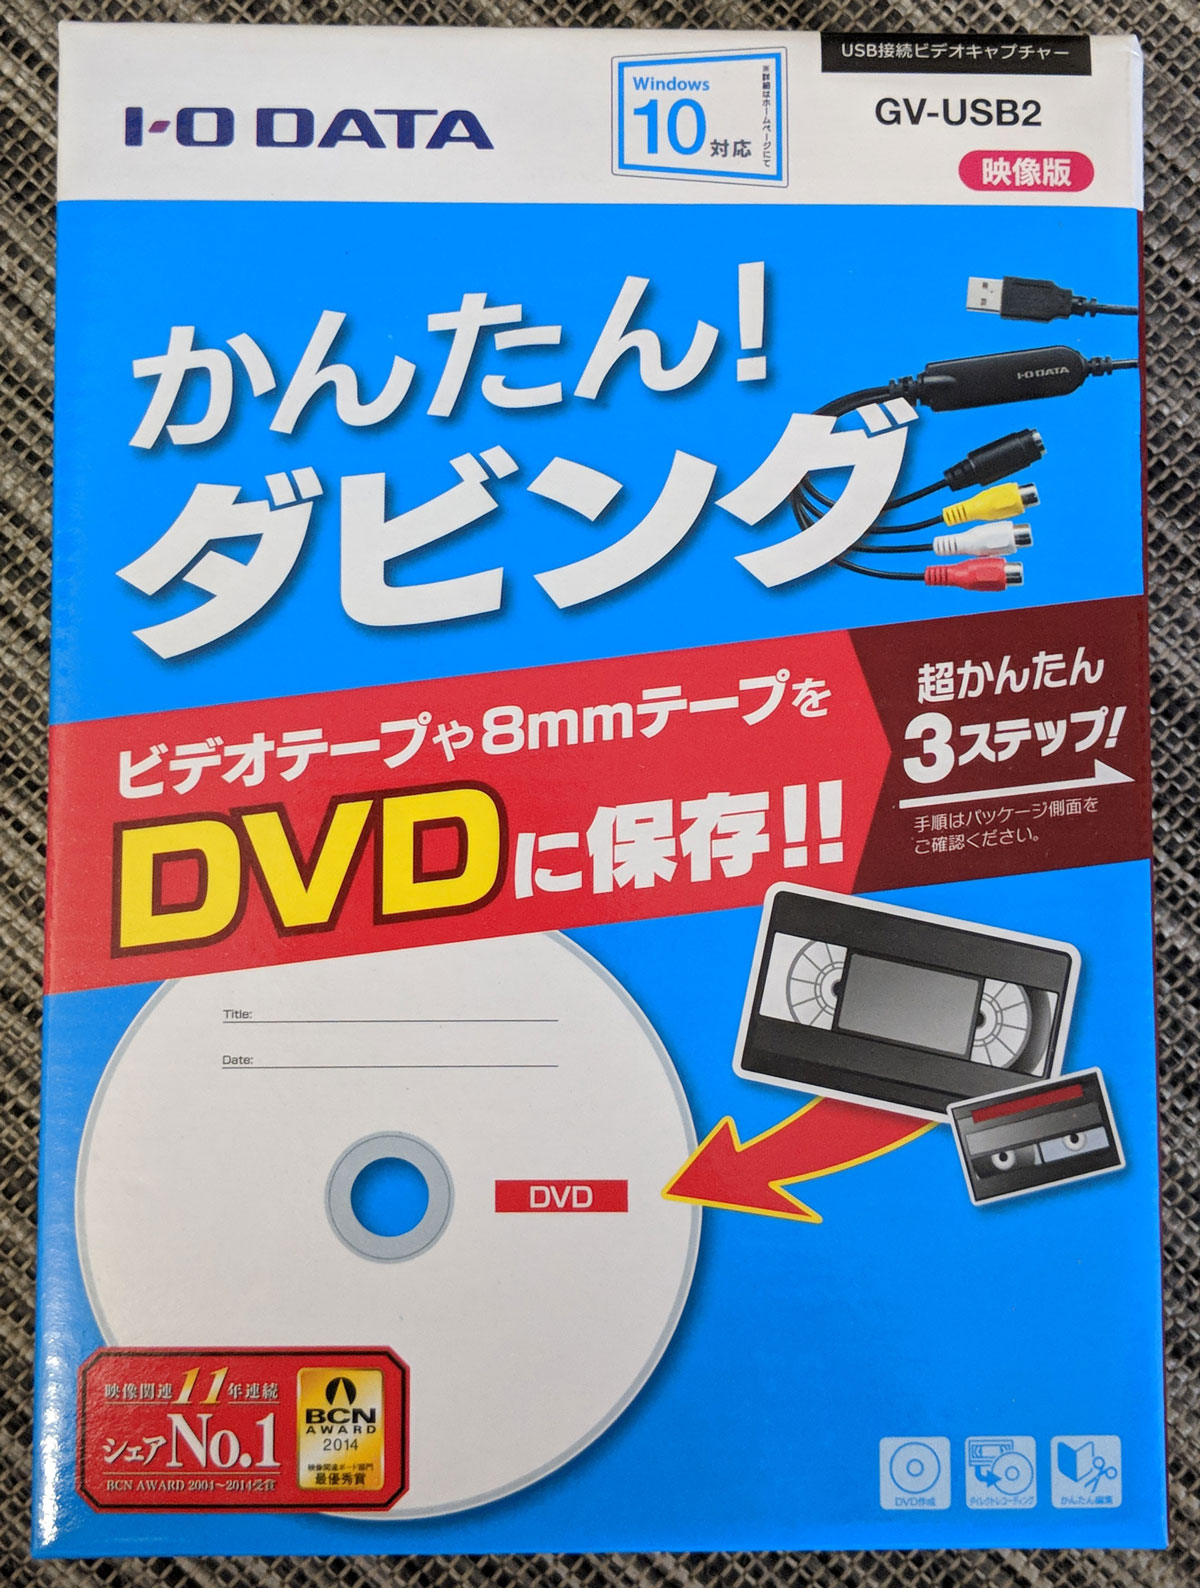 GV-USB2 video capture device